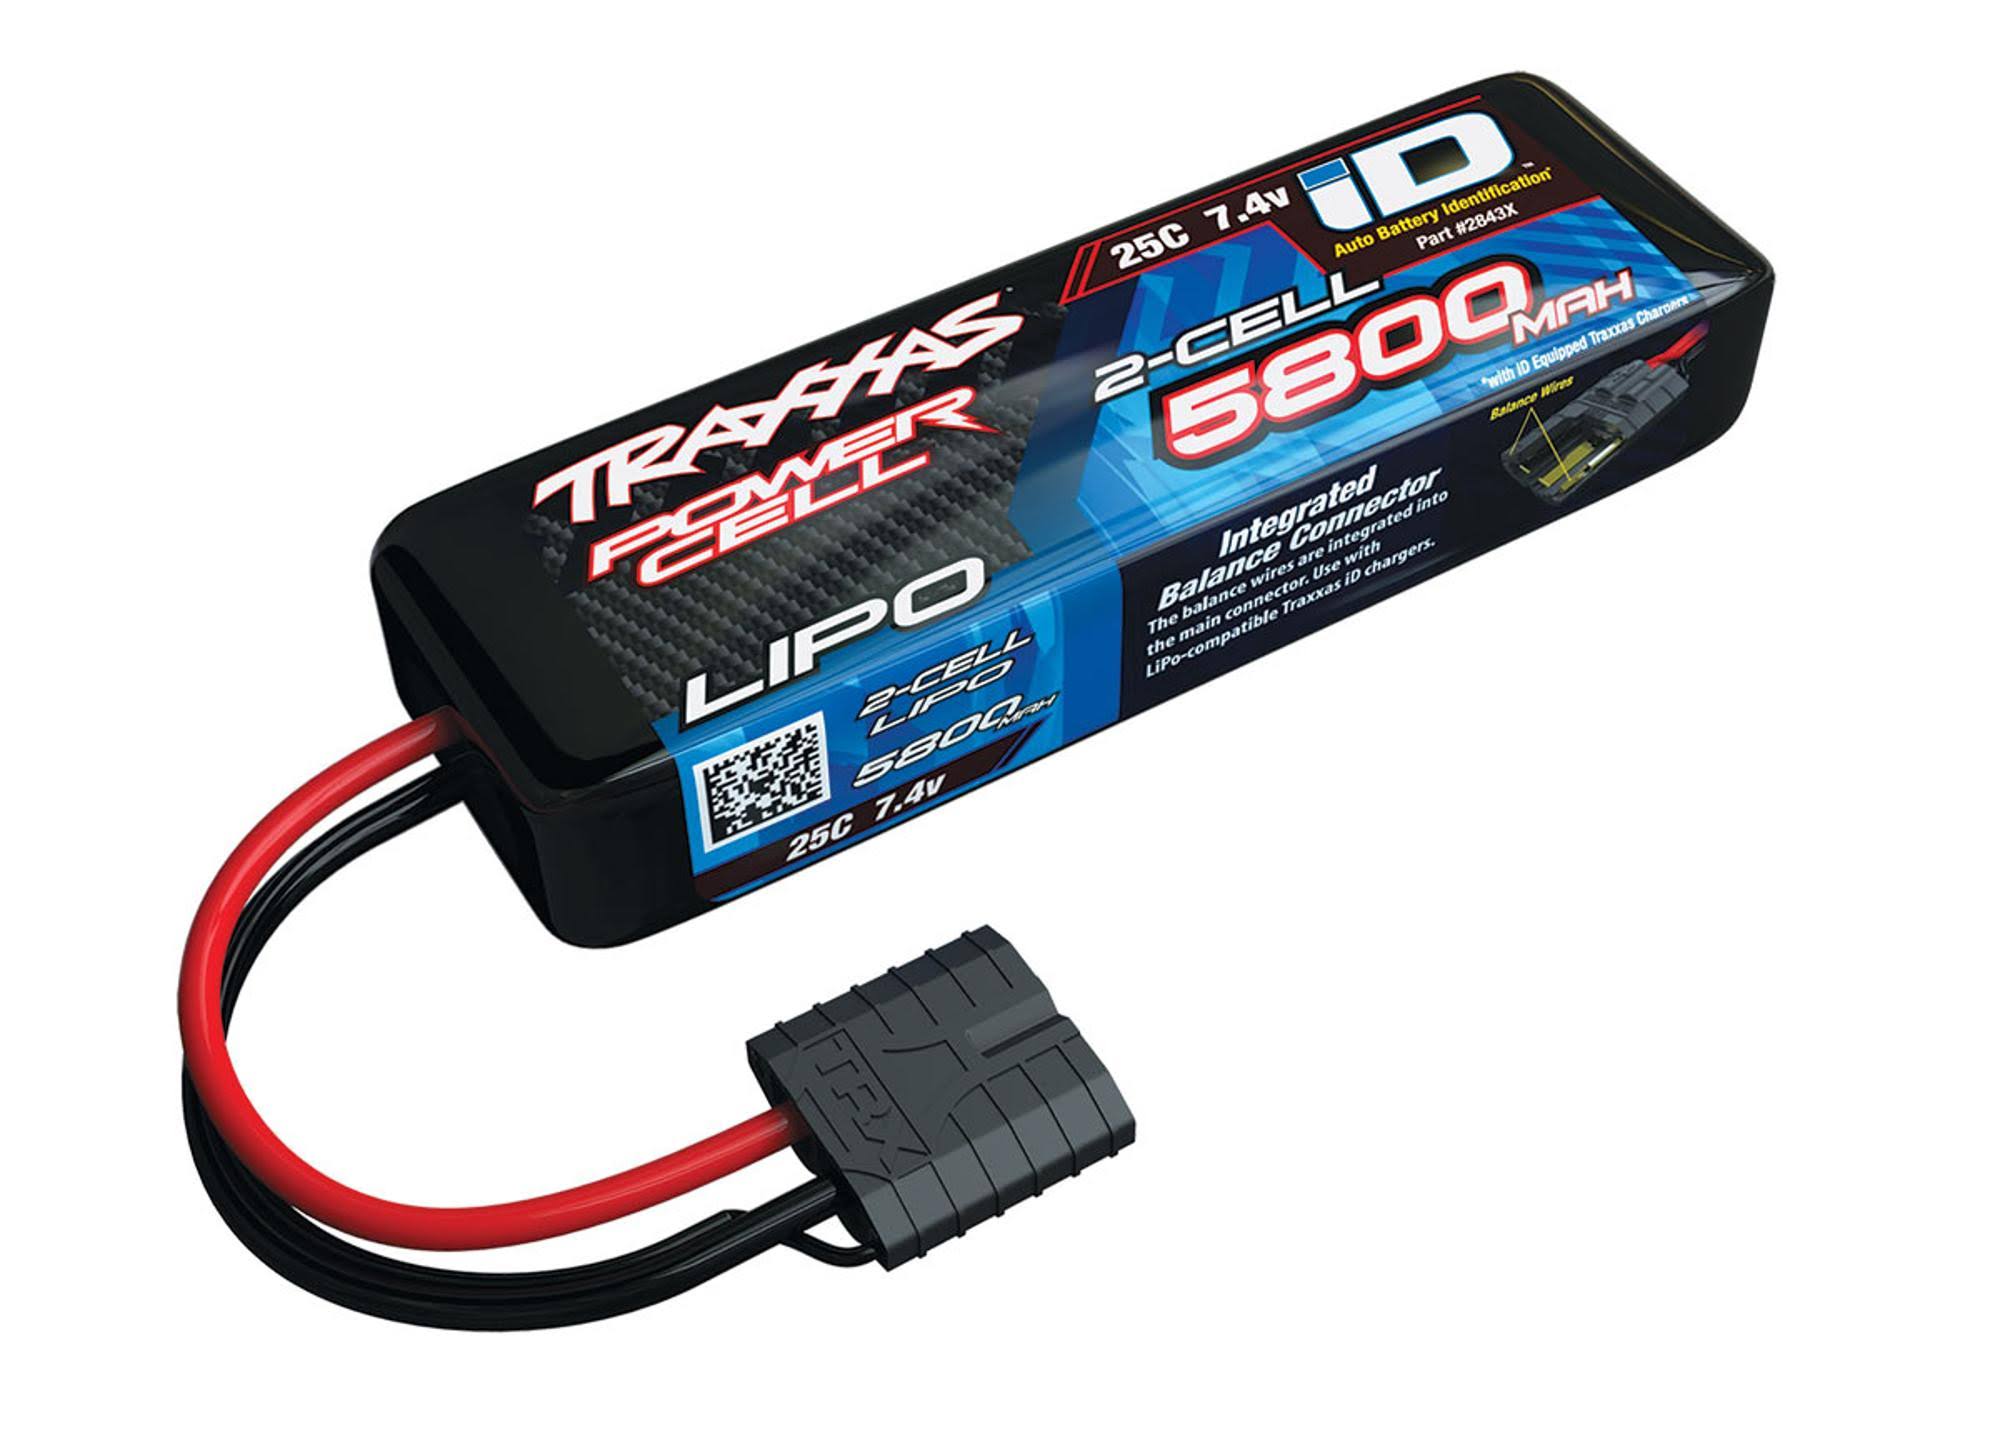 Traxxas Power Cell 25C LiPo 2s Battery - 5800mAh, 7.4V